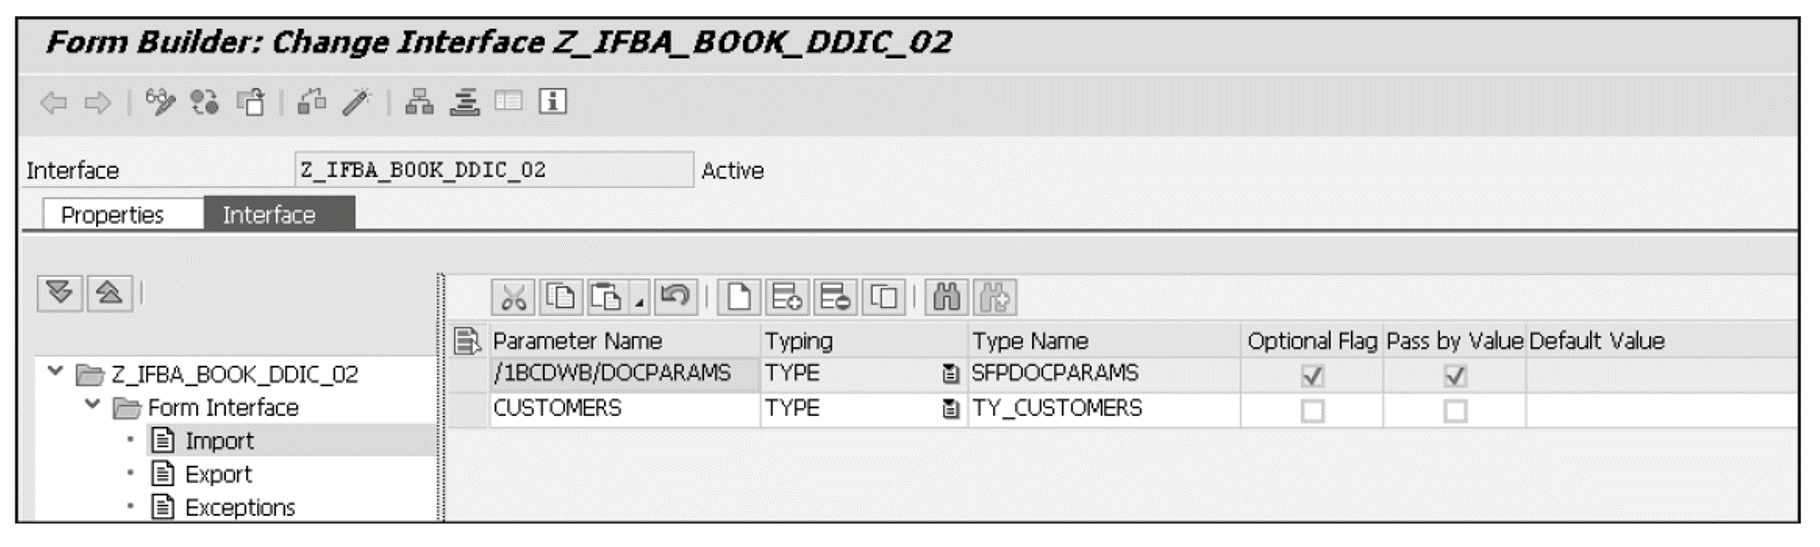 Interface Z_IFBA_BOOK_DDIC_02